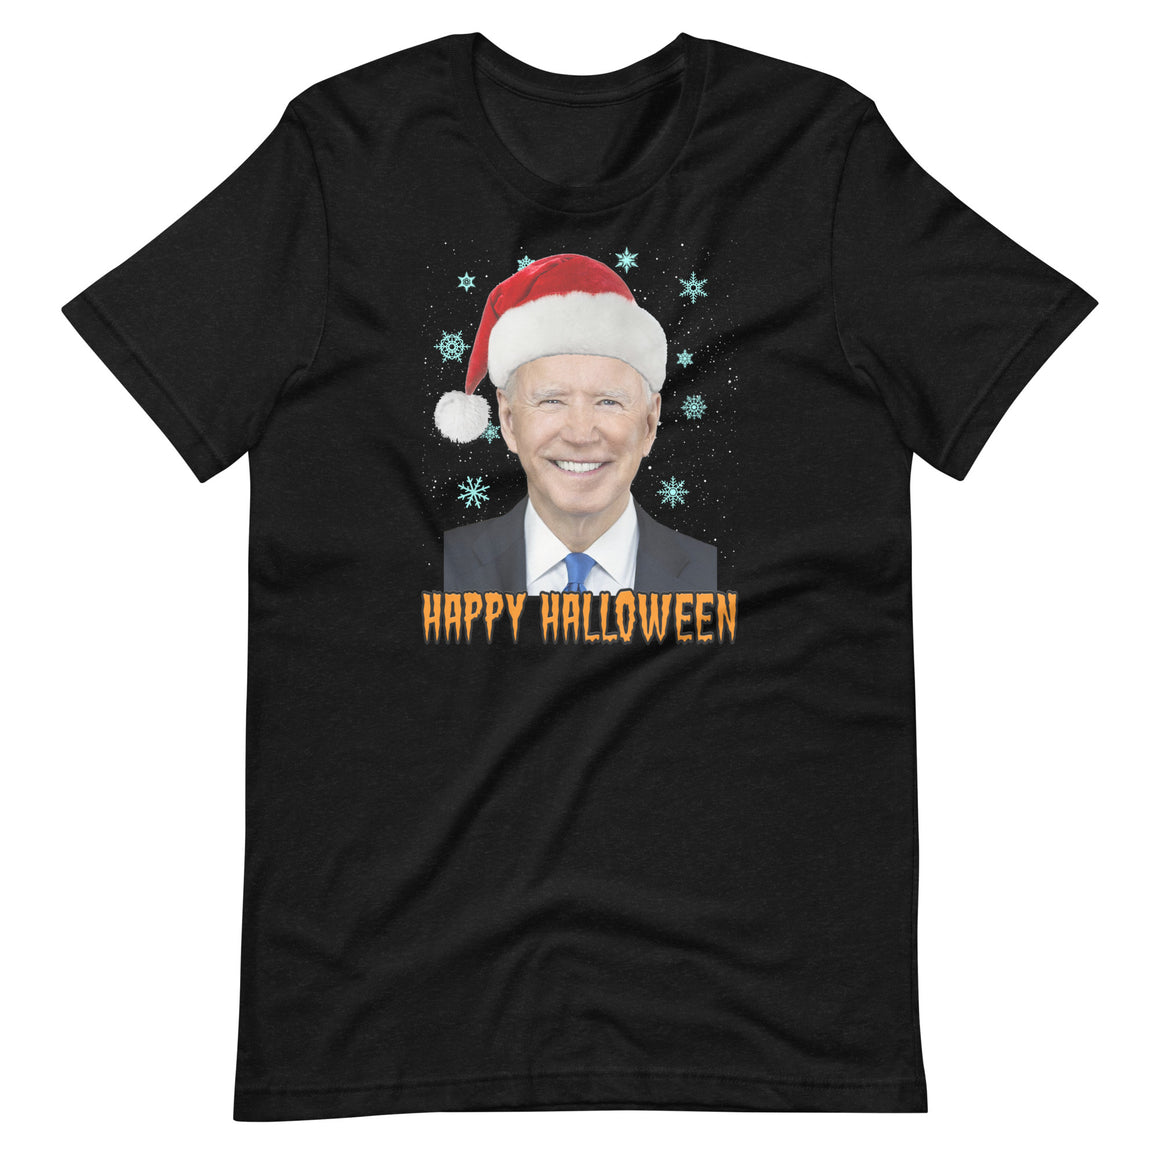 Joe Biden Happy Halloween Shirt by Libertarian Country